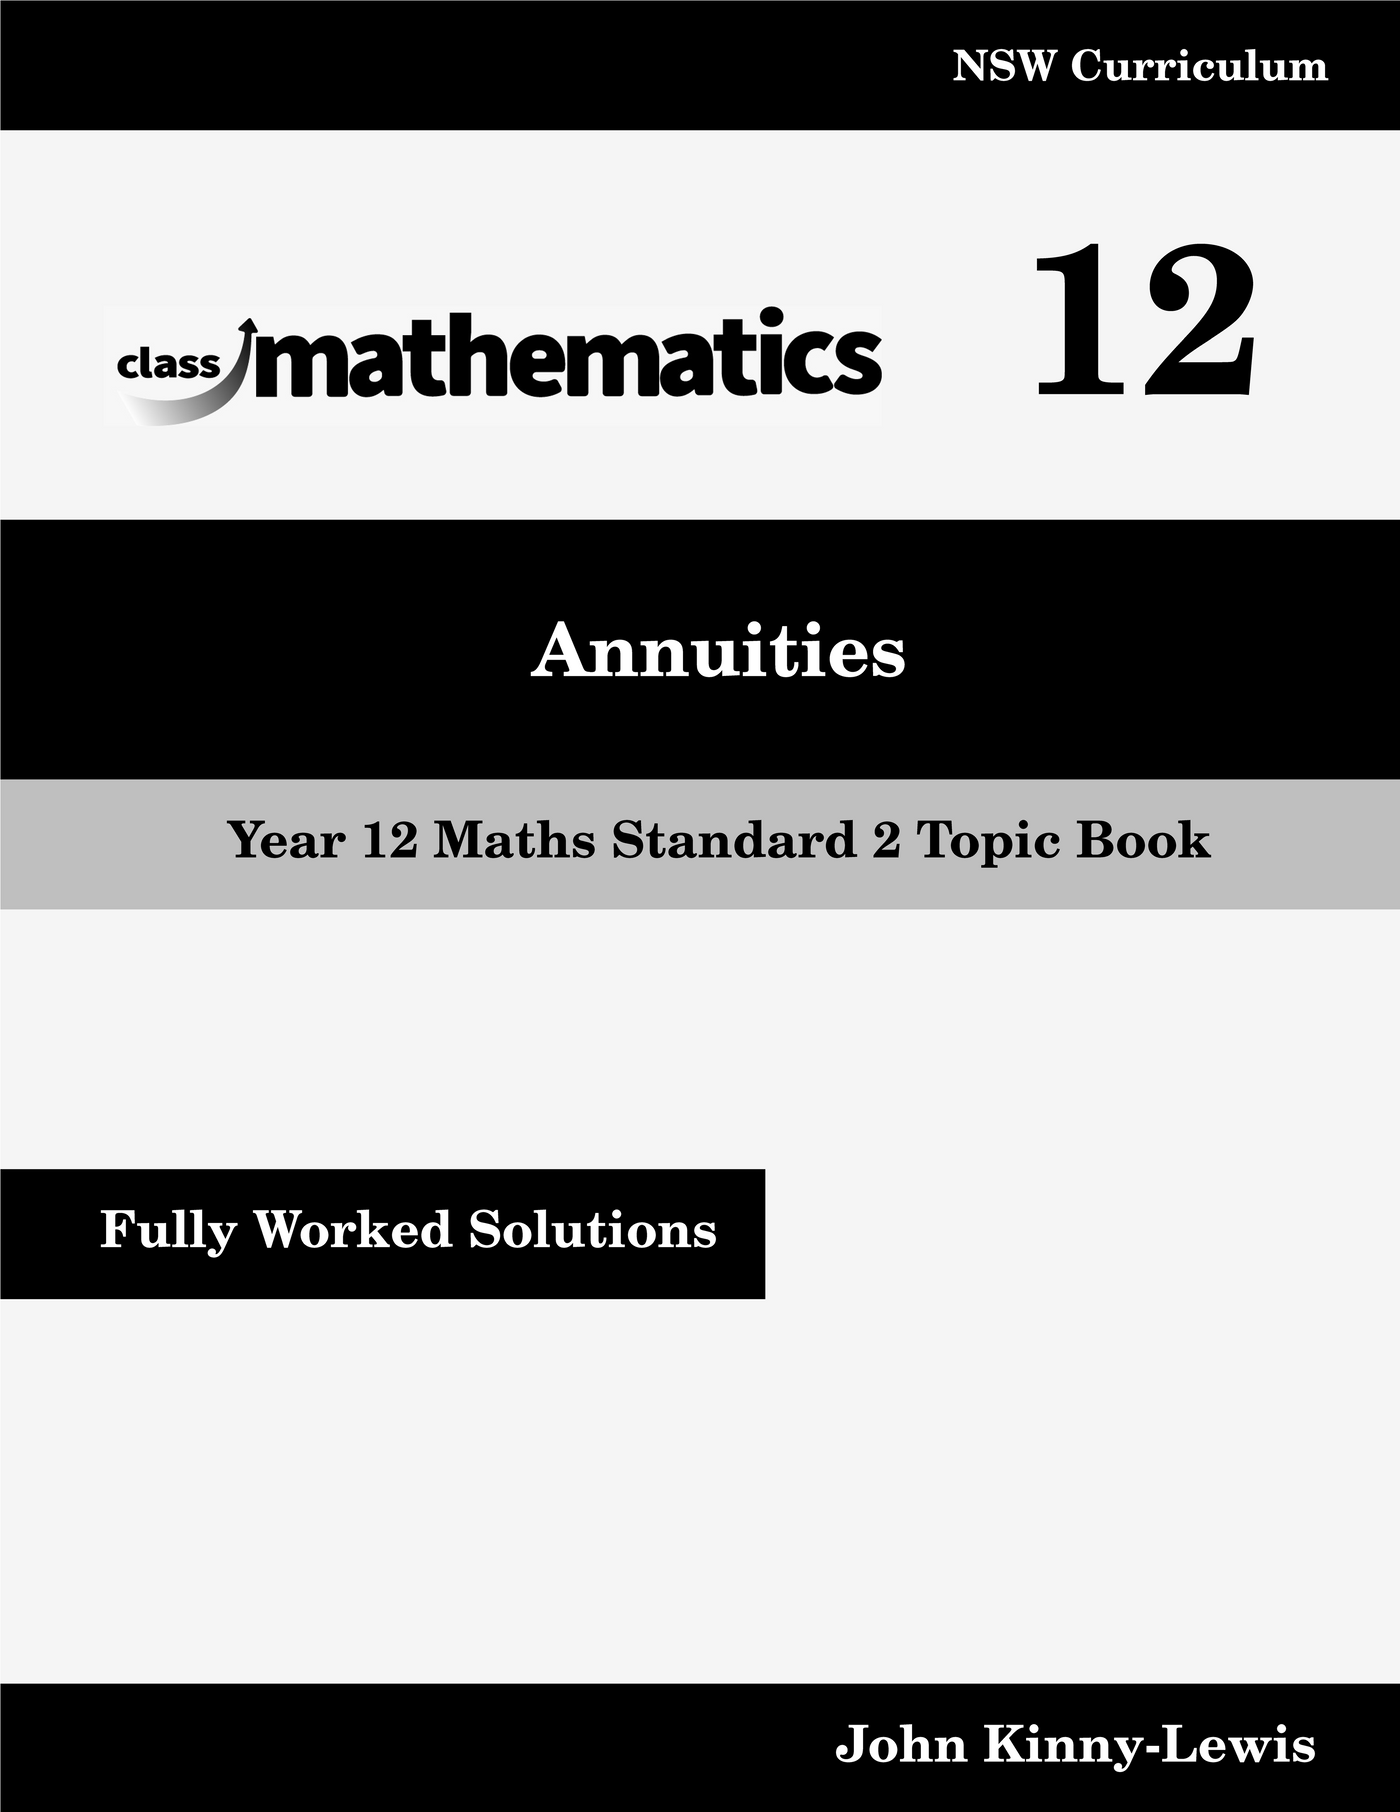 NSW Year 12 Maths Standard 2 - Annuities